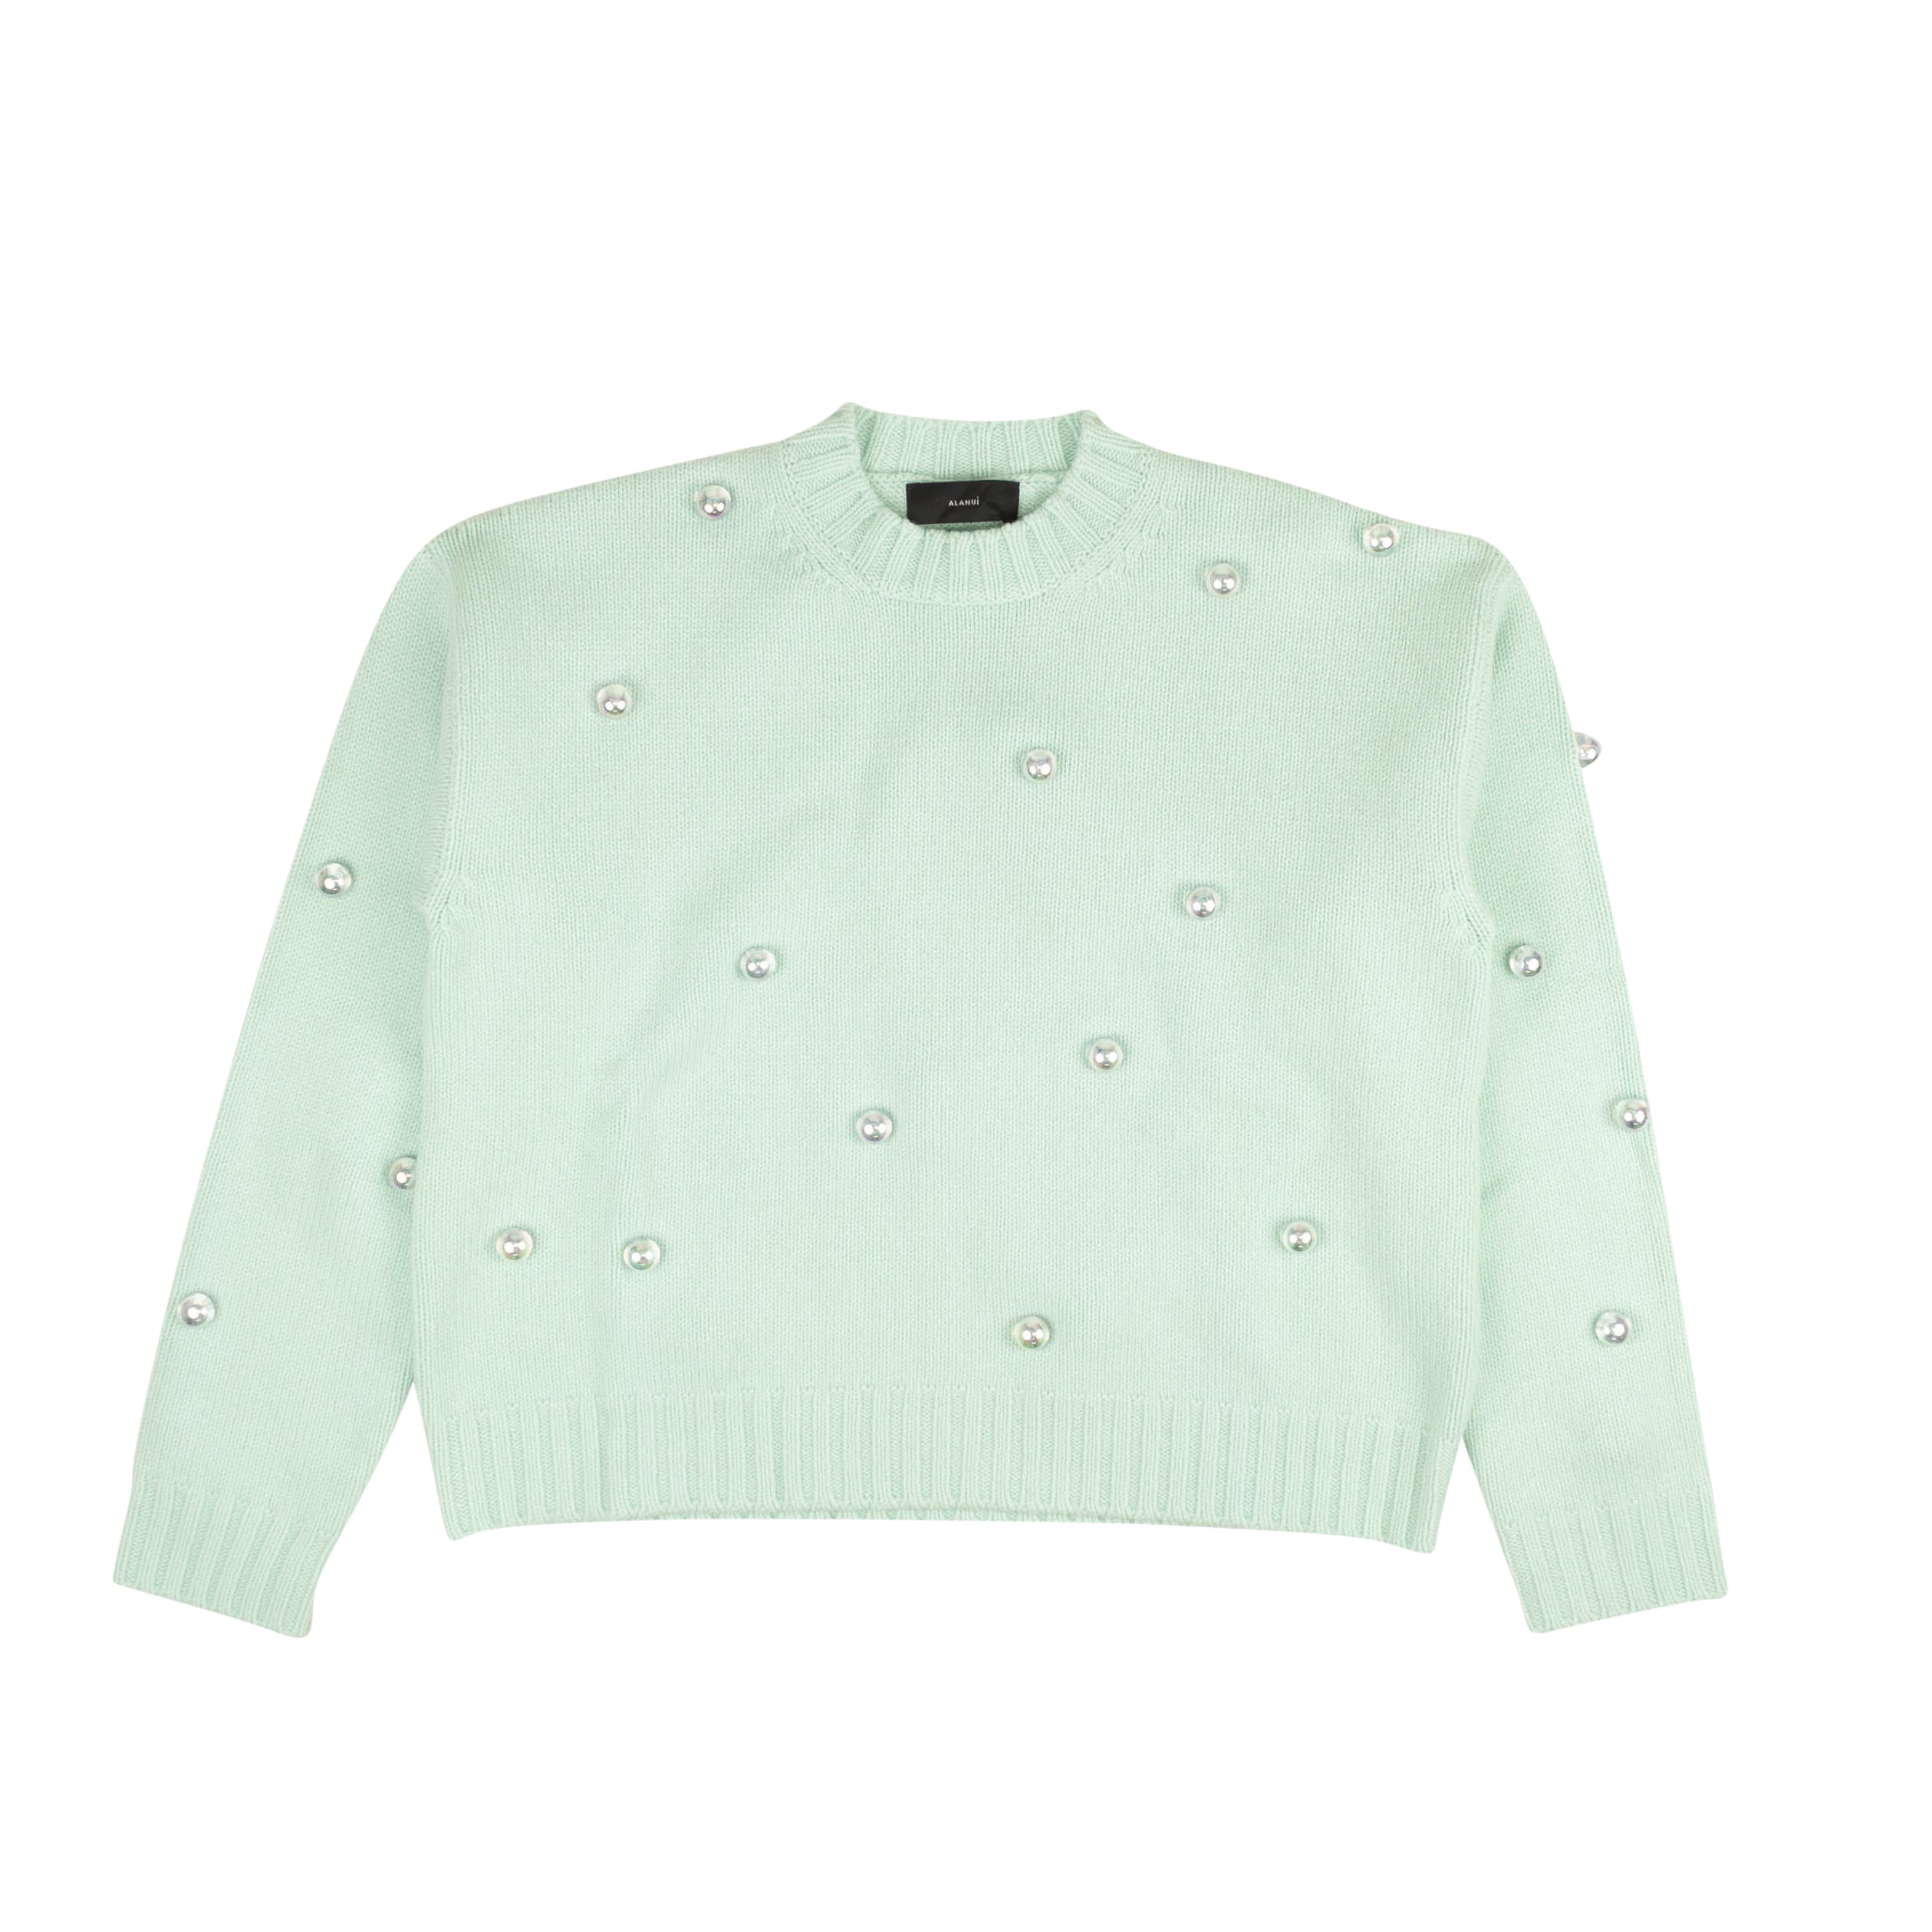 Alanui Knit Marble Studder Cashmere Sweater - Mint Green